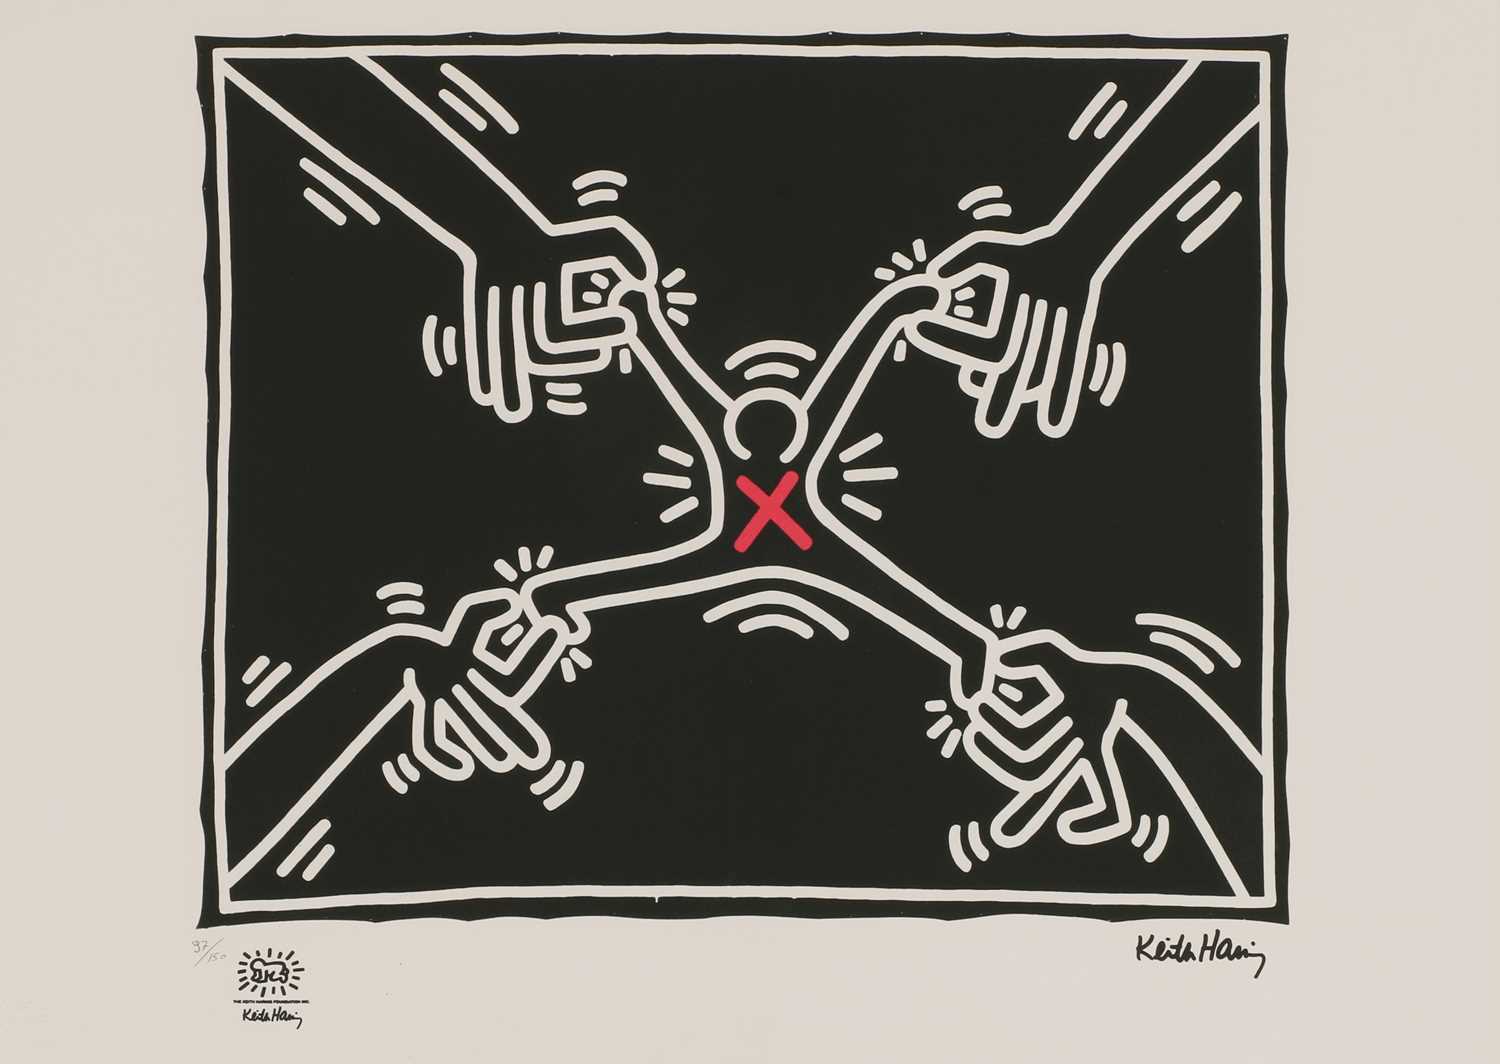 Lot 324 - Keith Haring (American, 1958-1990)